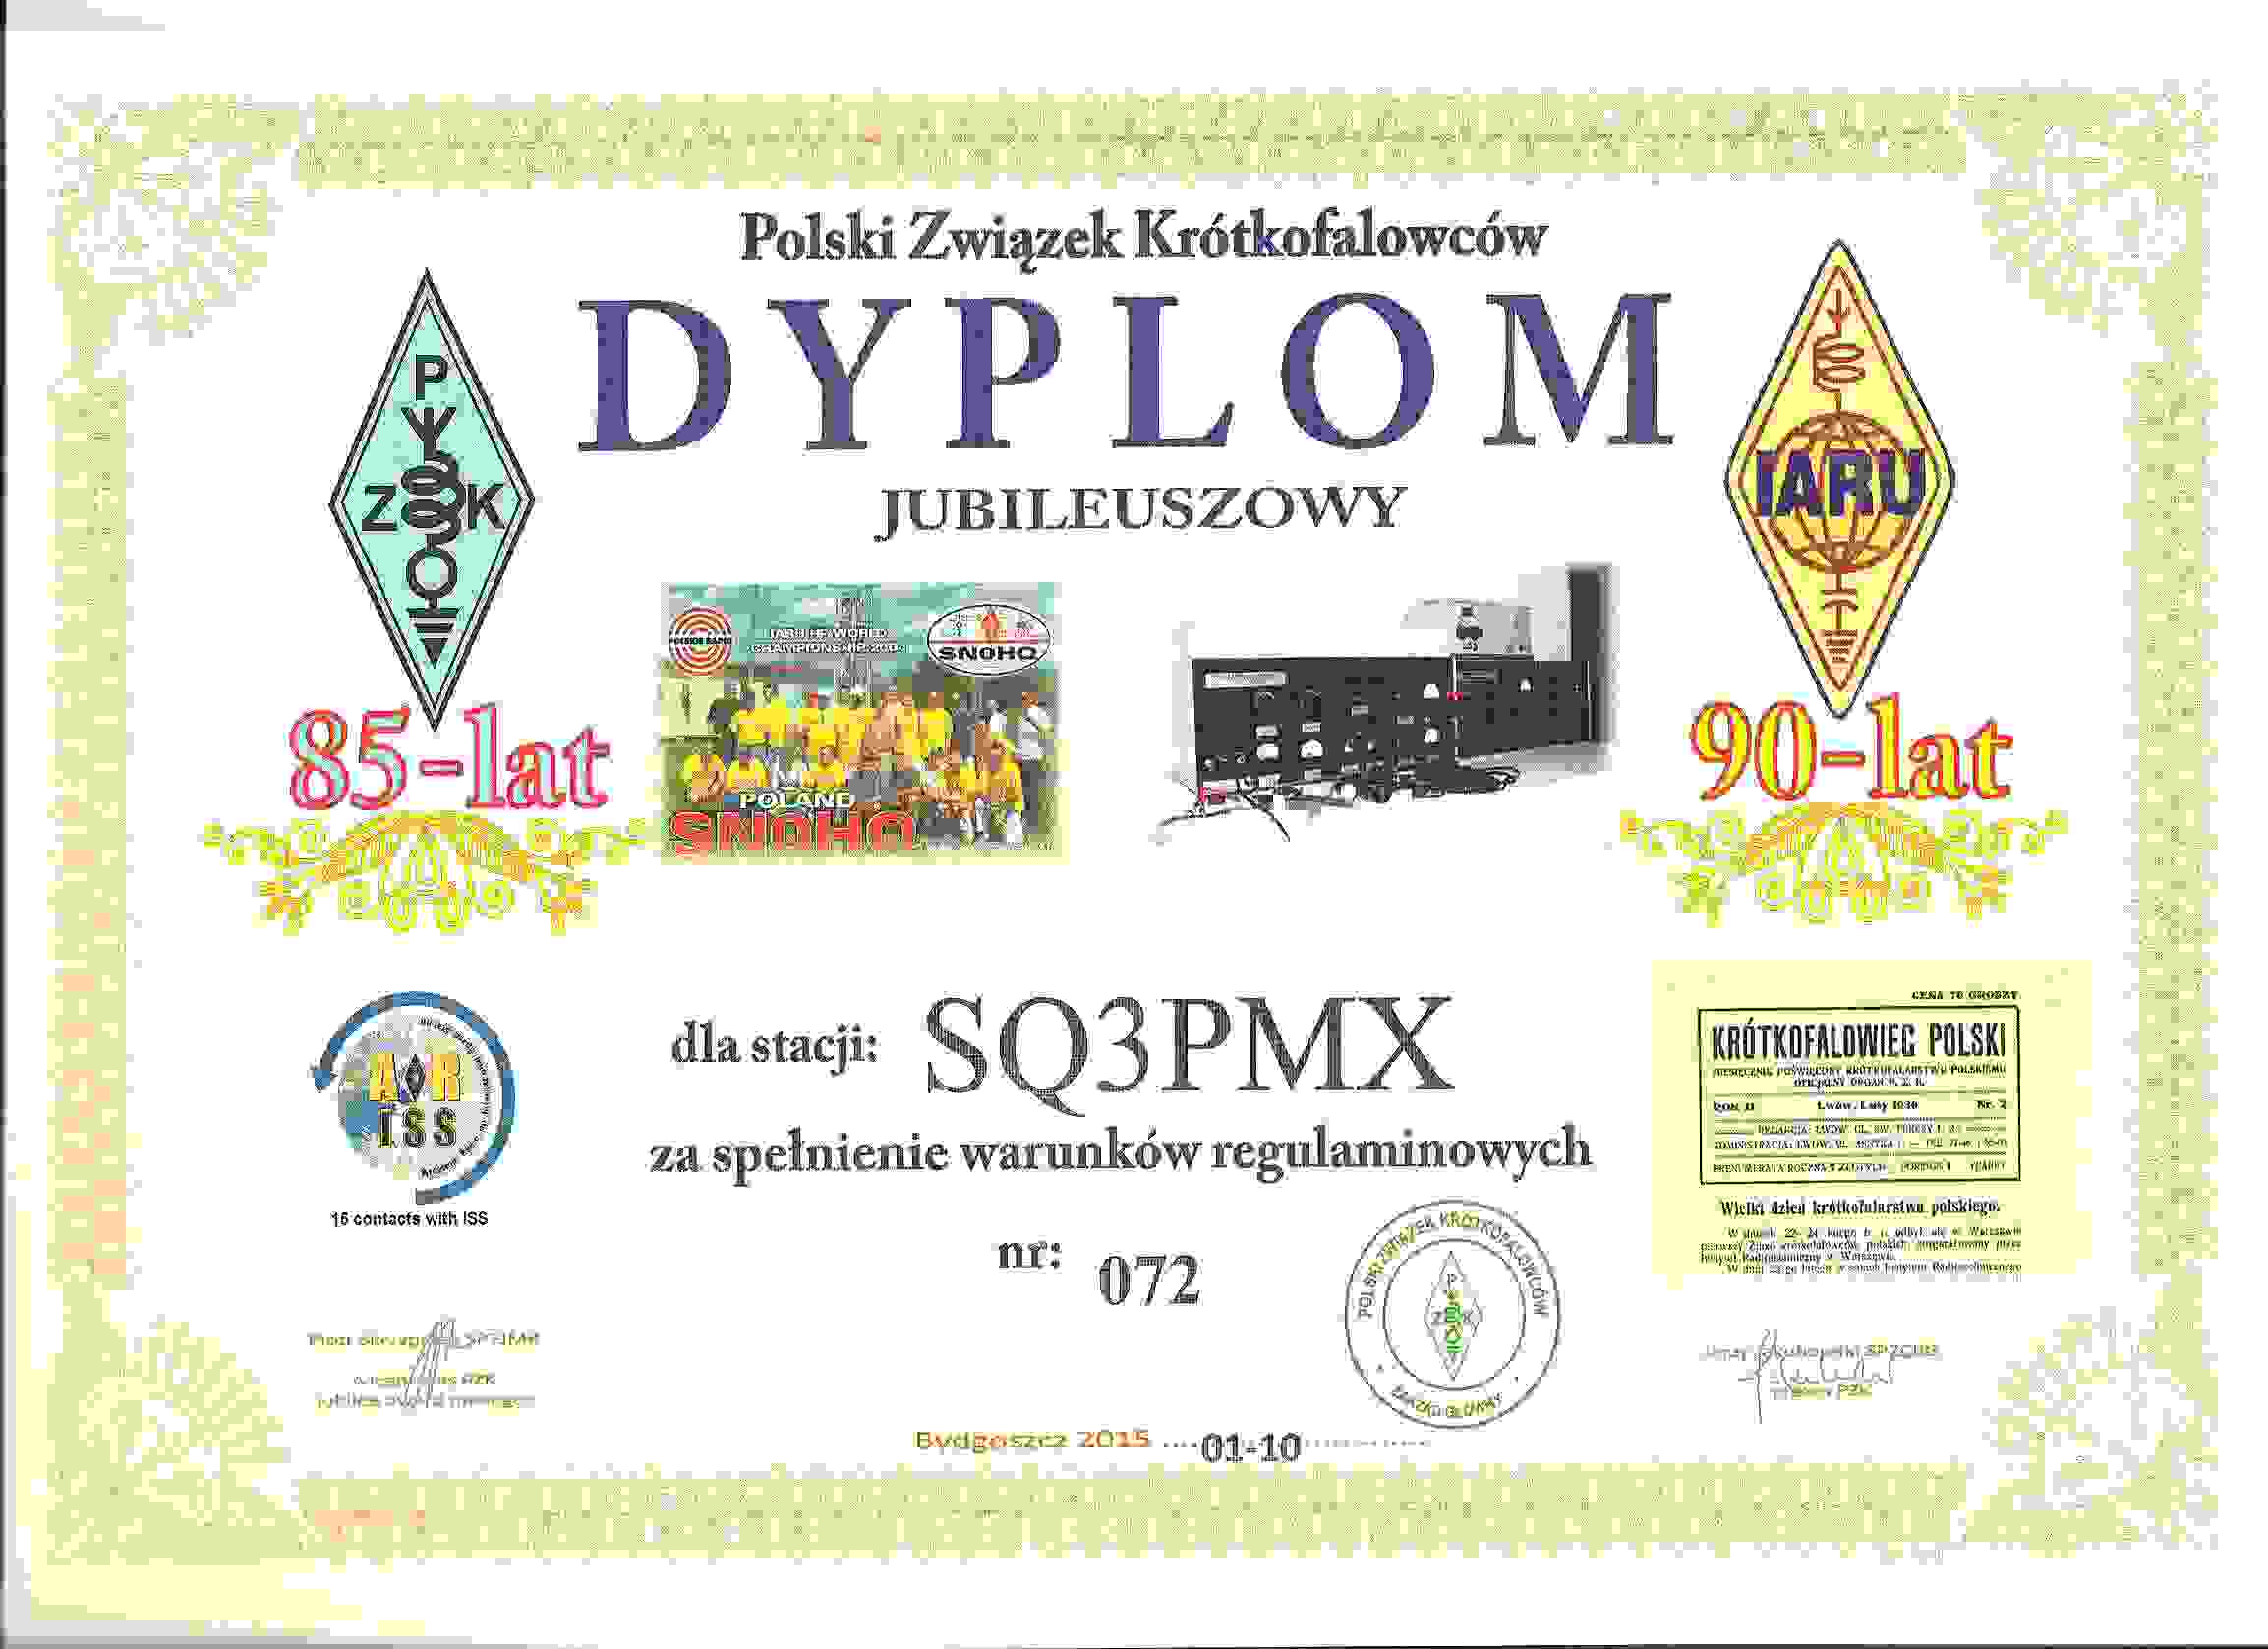 Images: dyplom 85 ZG PZK .jpg